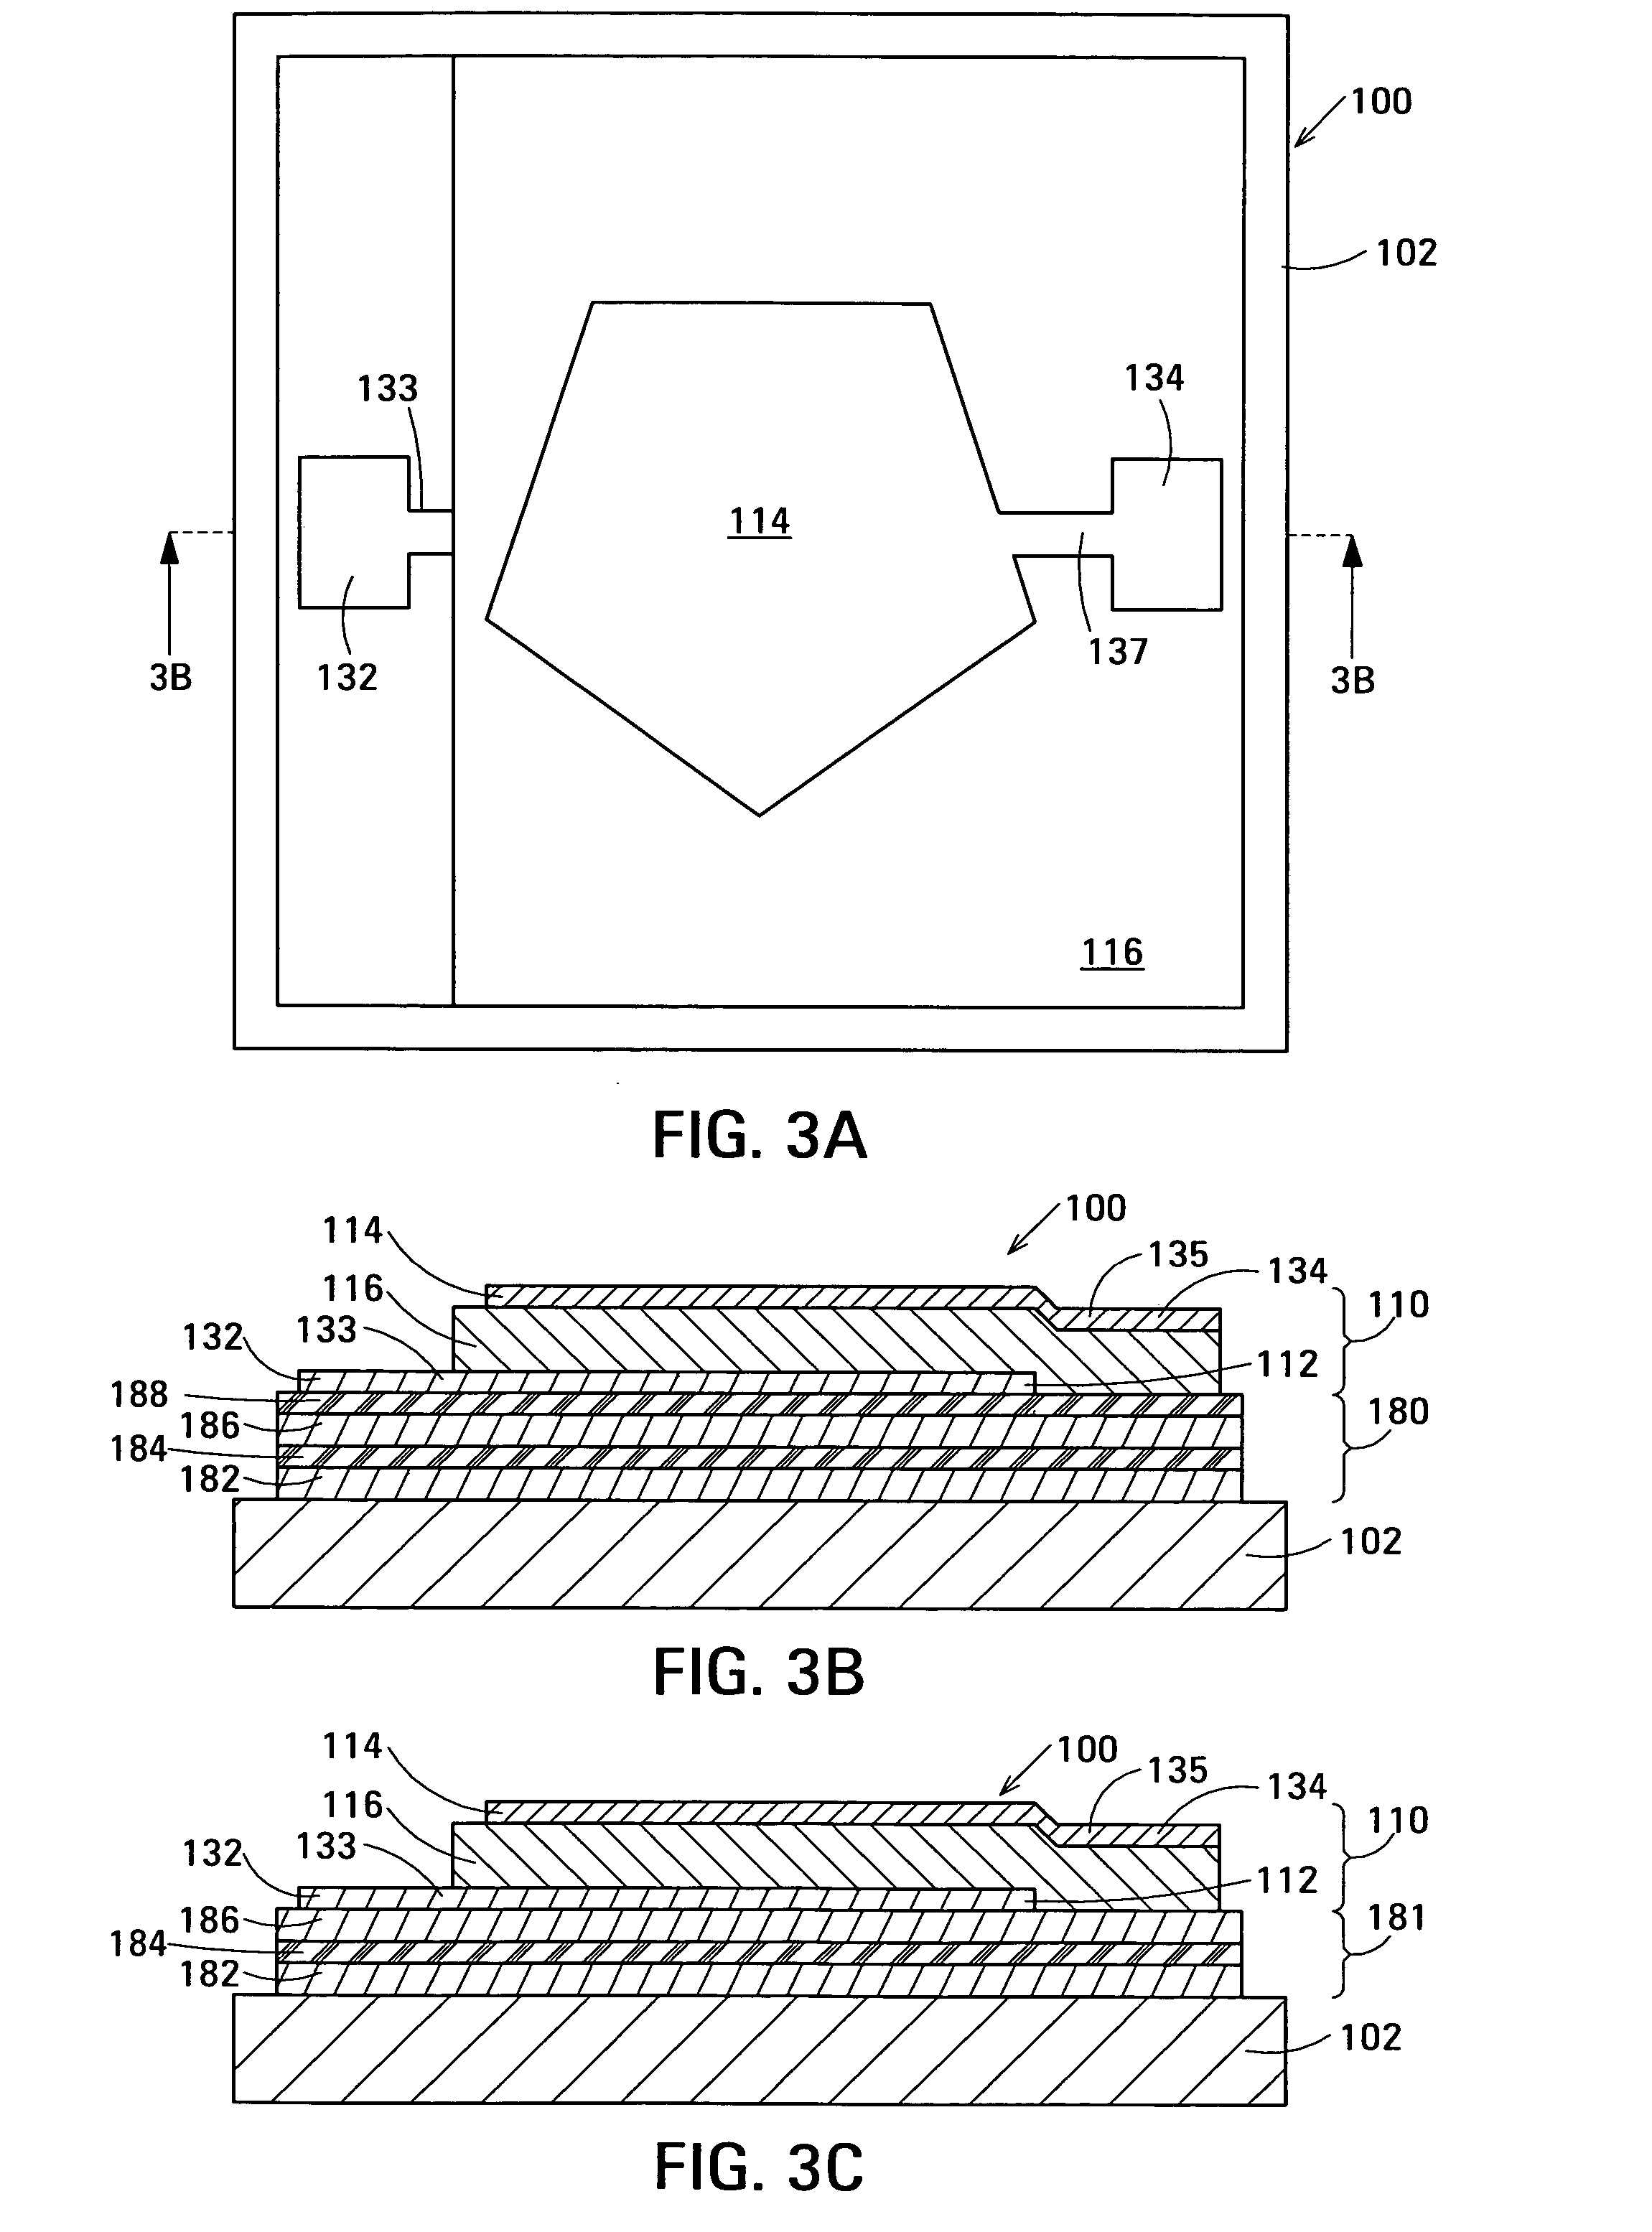 Cavity-less film bulk acoustic resonator (FBAR) devices